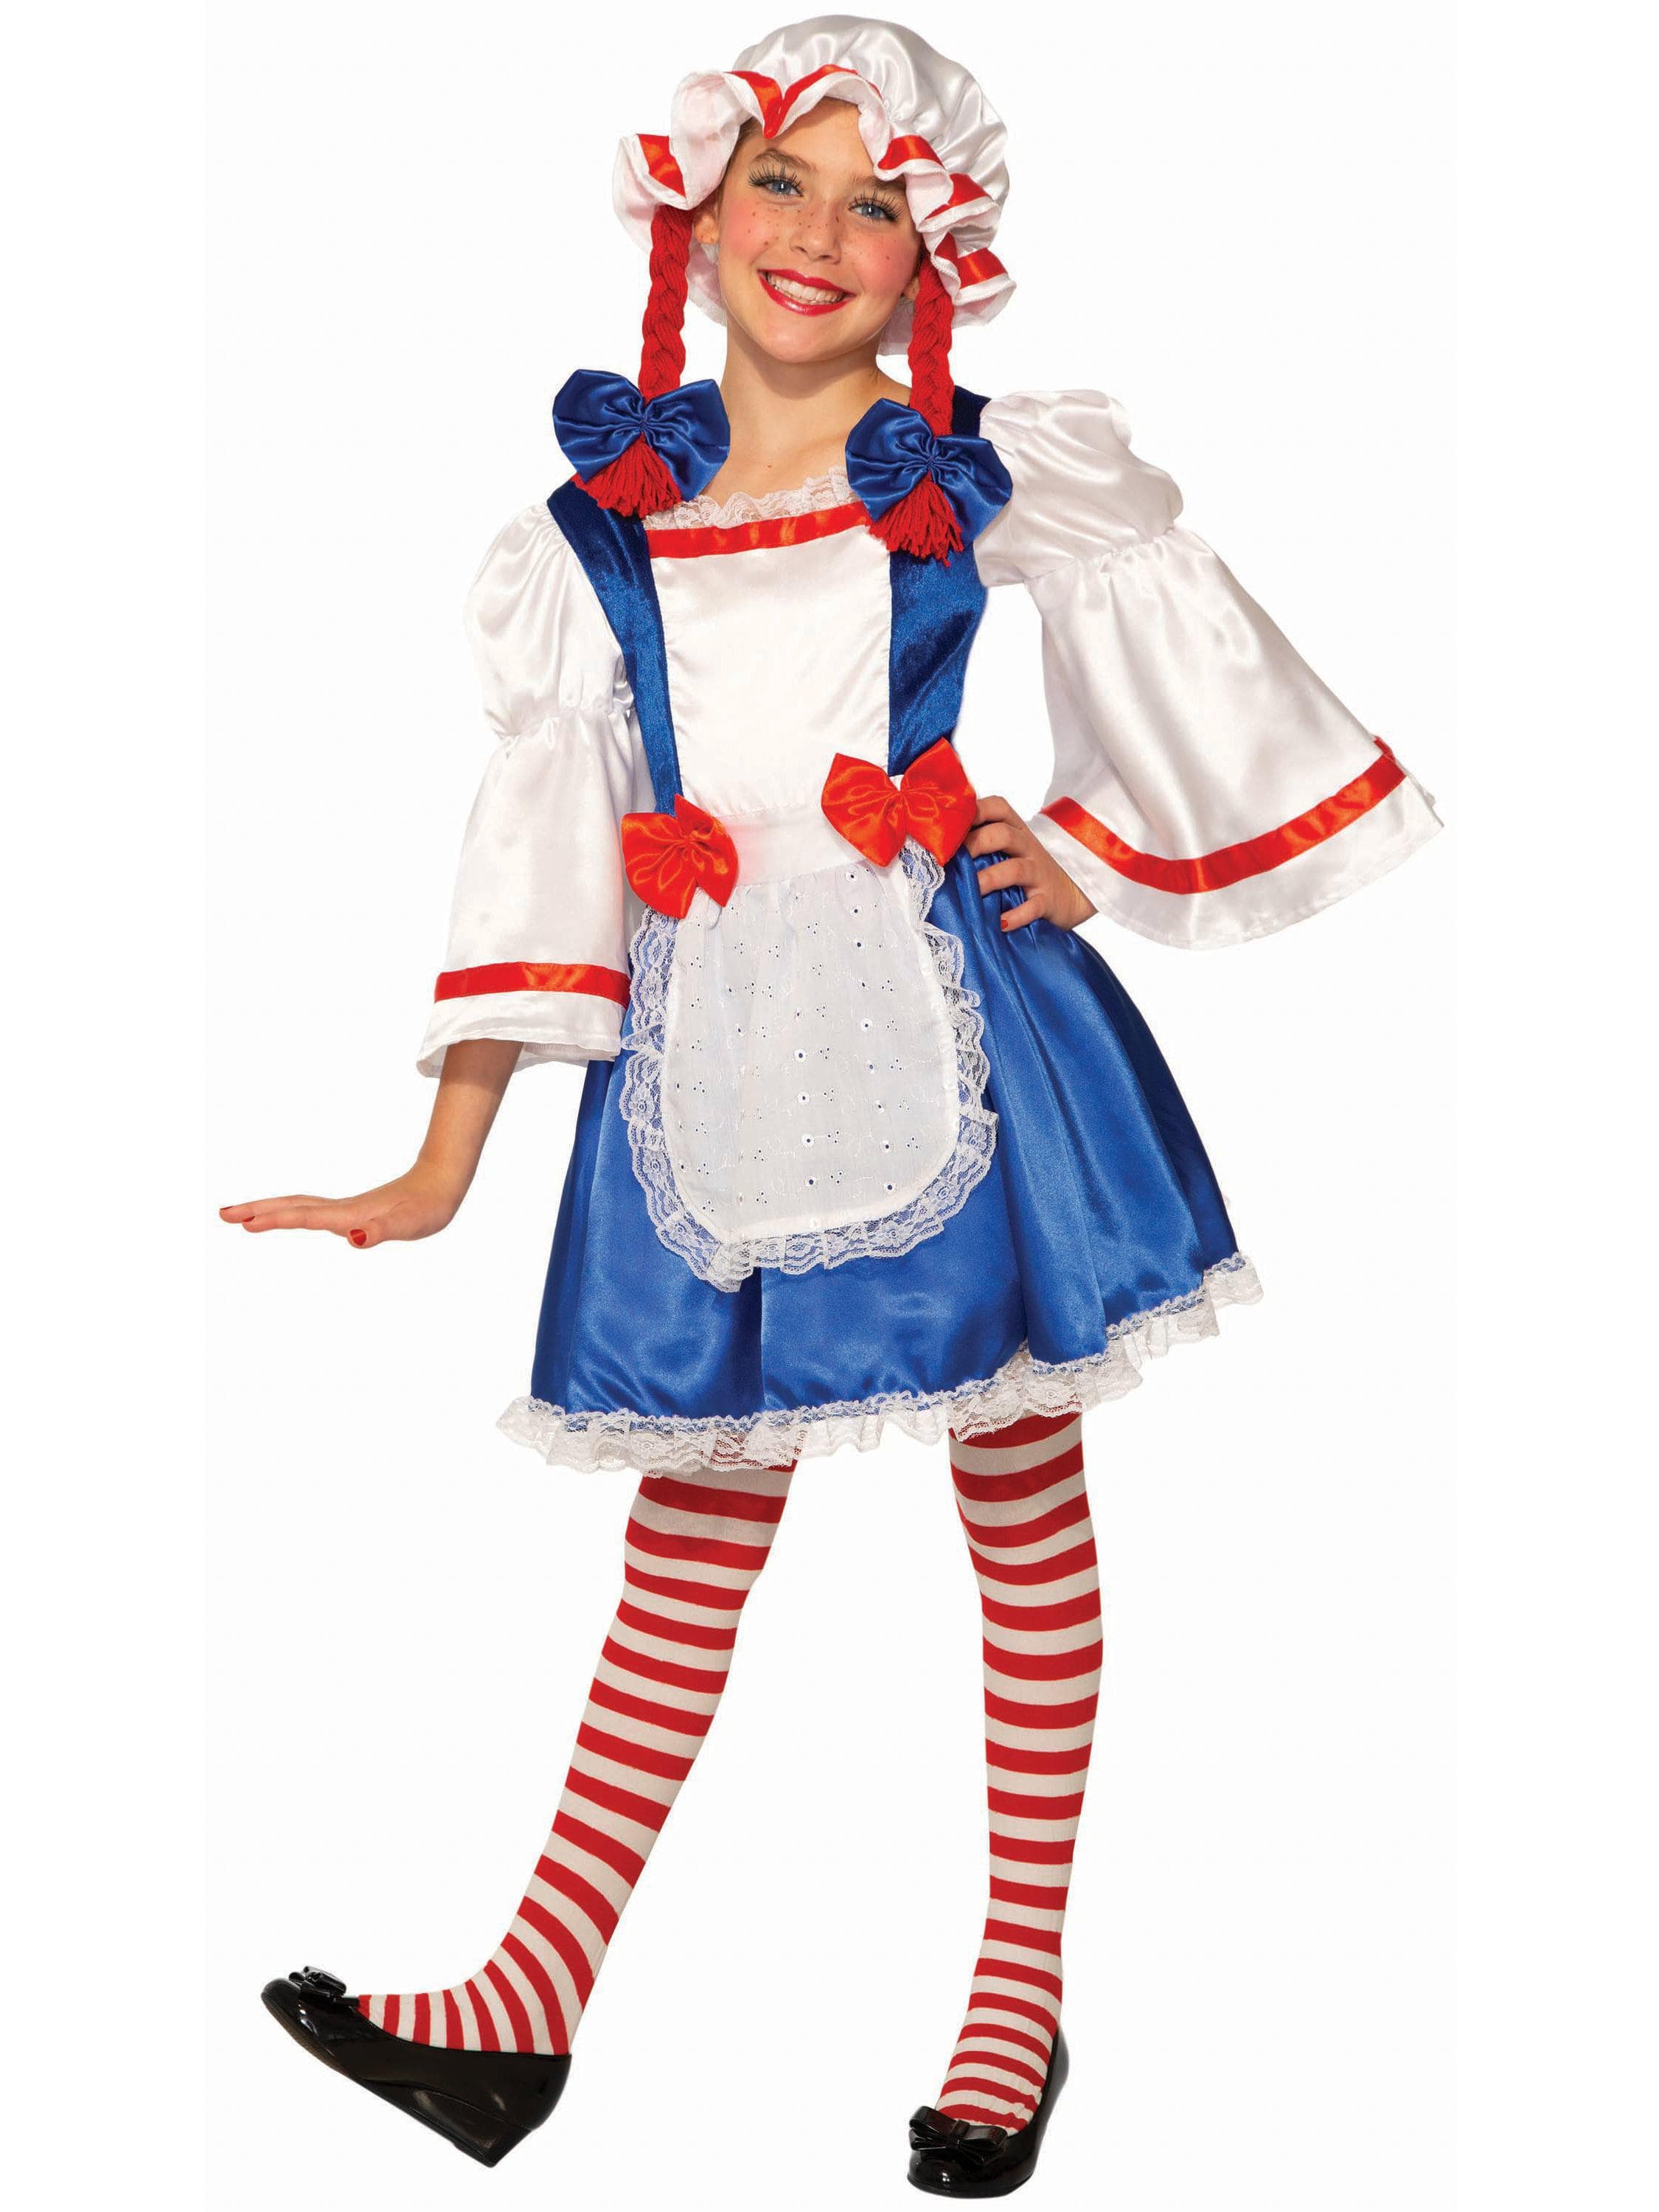 Kid's Rag Dollie Costume - costumes.com